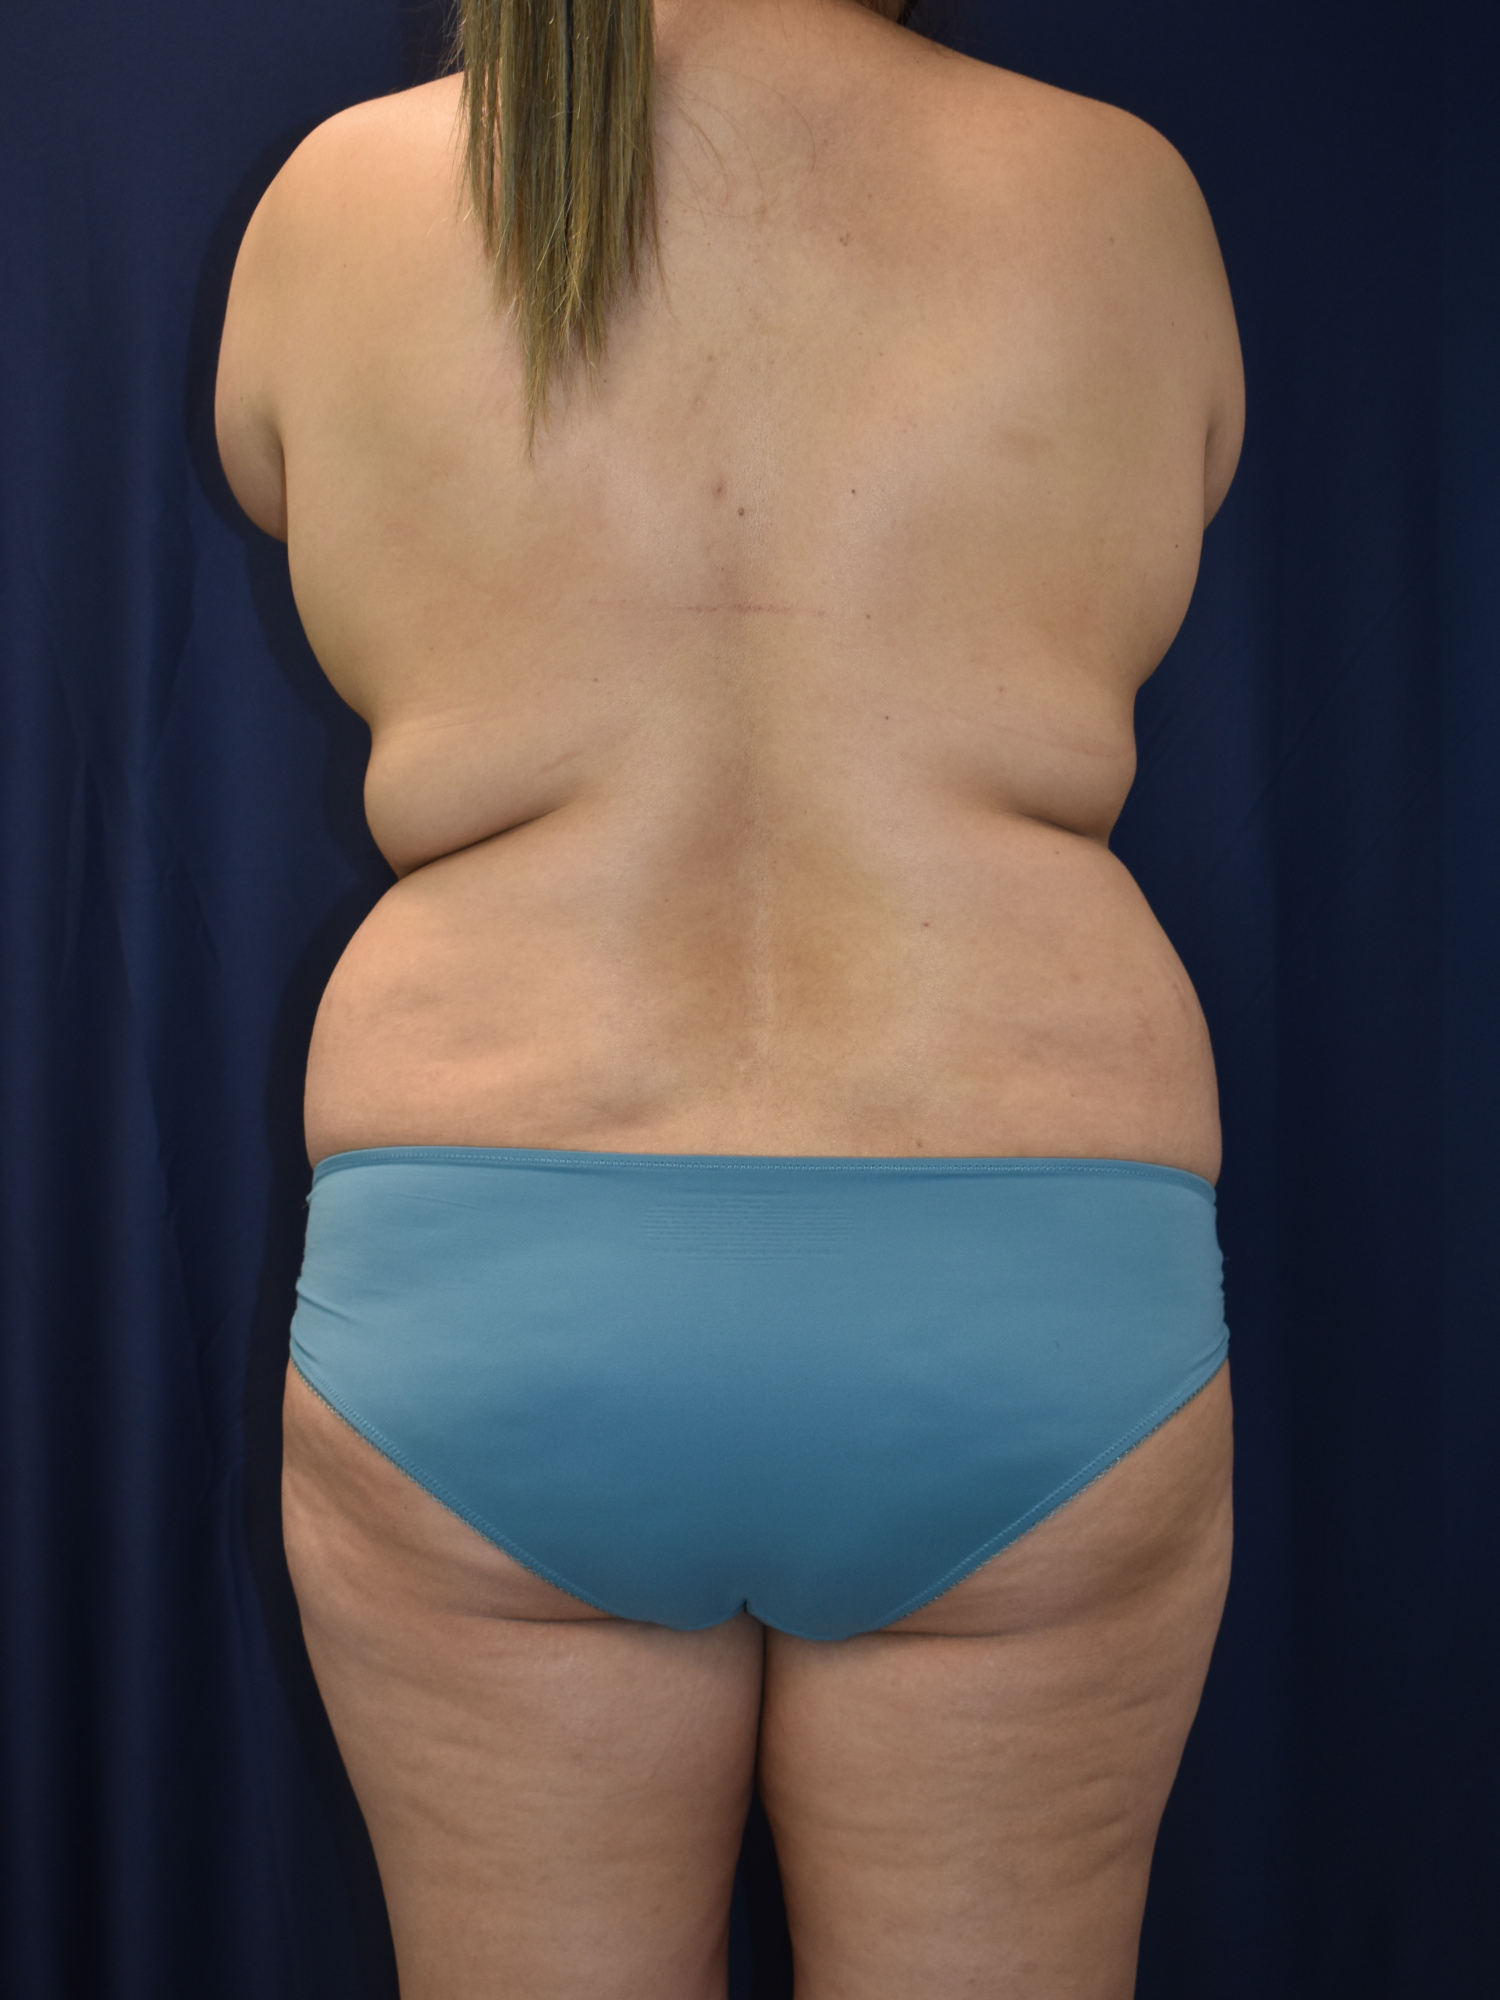 Abdominoplasty (Tummy Tuck) Patient Photo - Case 2969 - before view-2